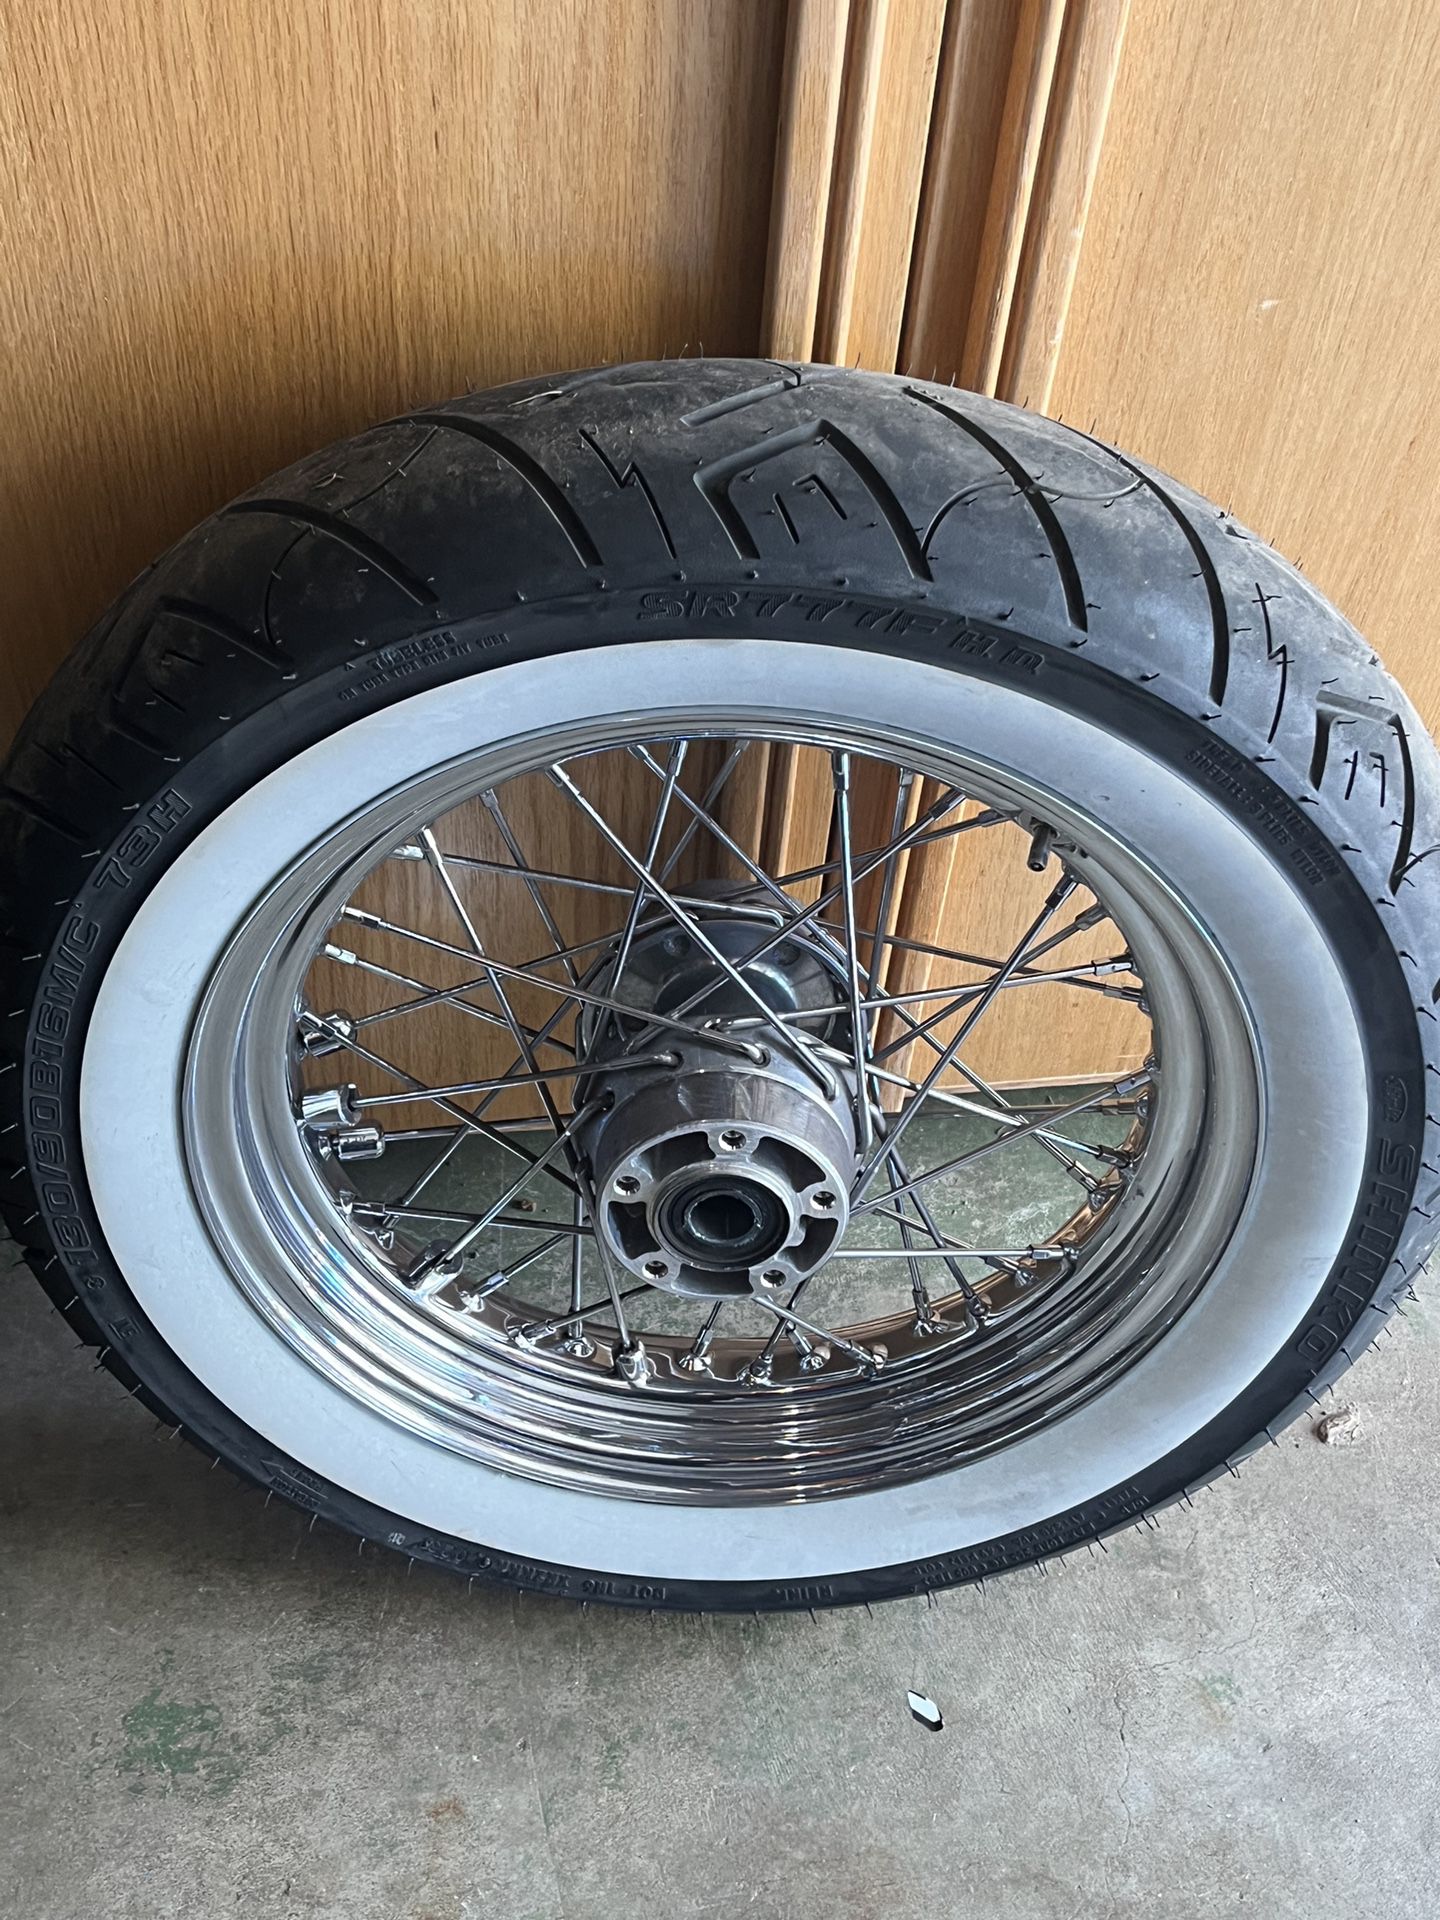 Harley Davidson 16” front wheel 